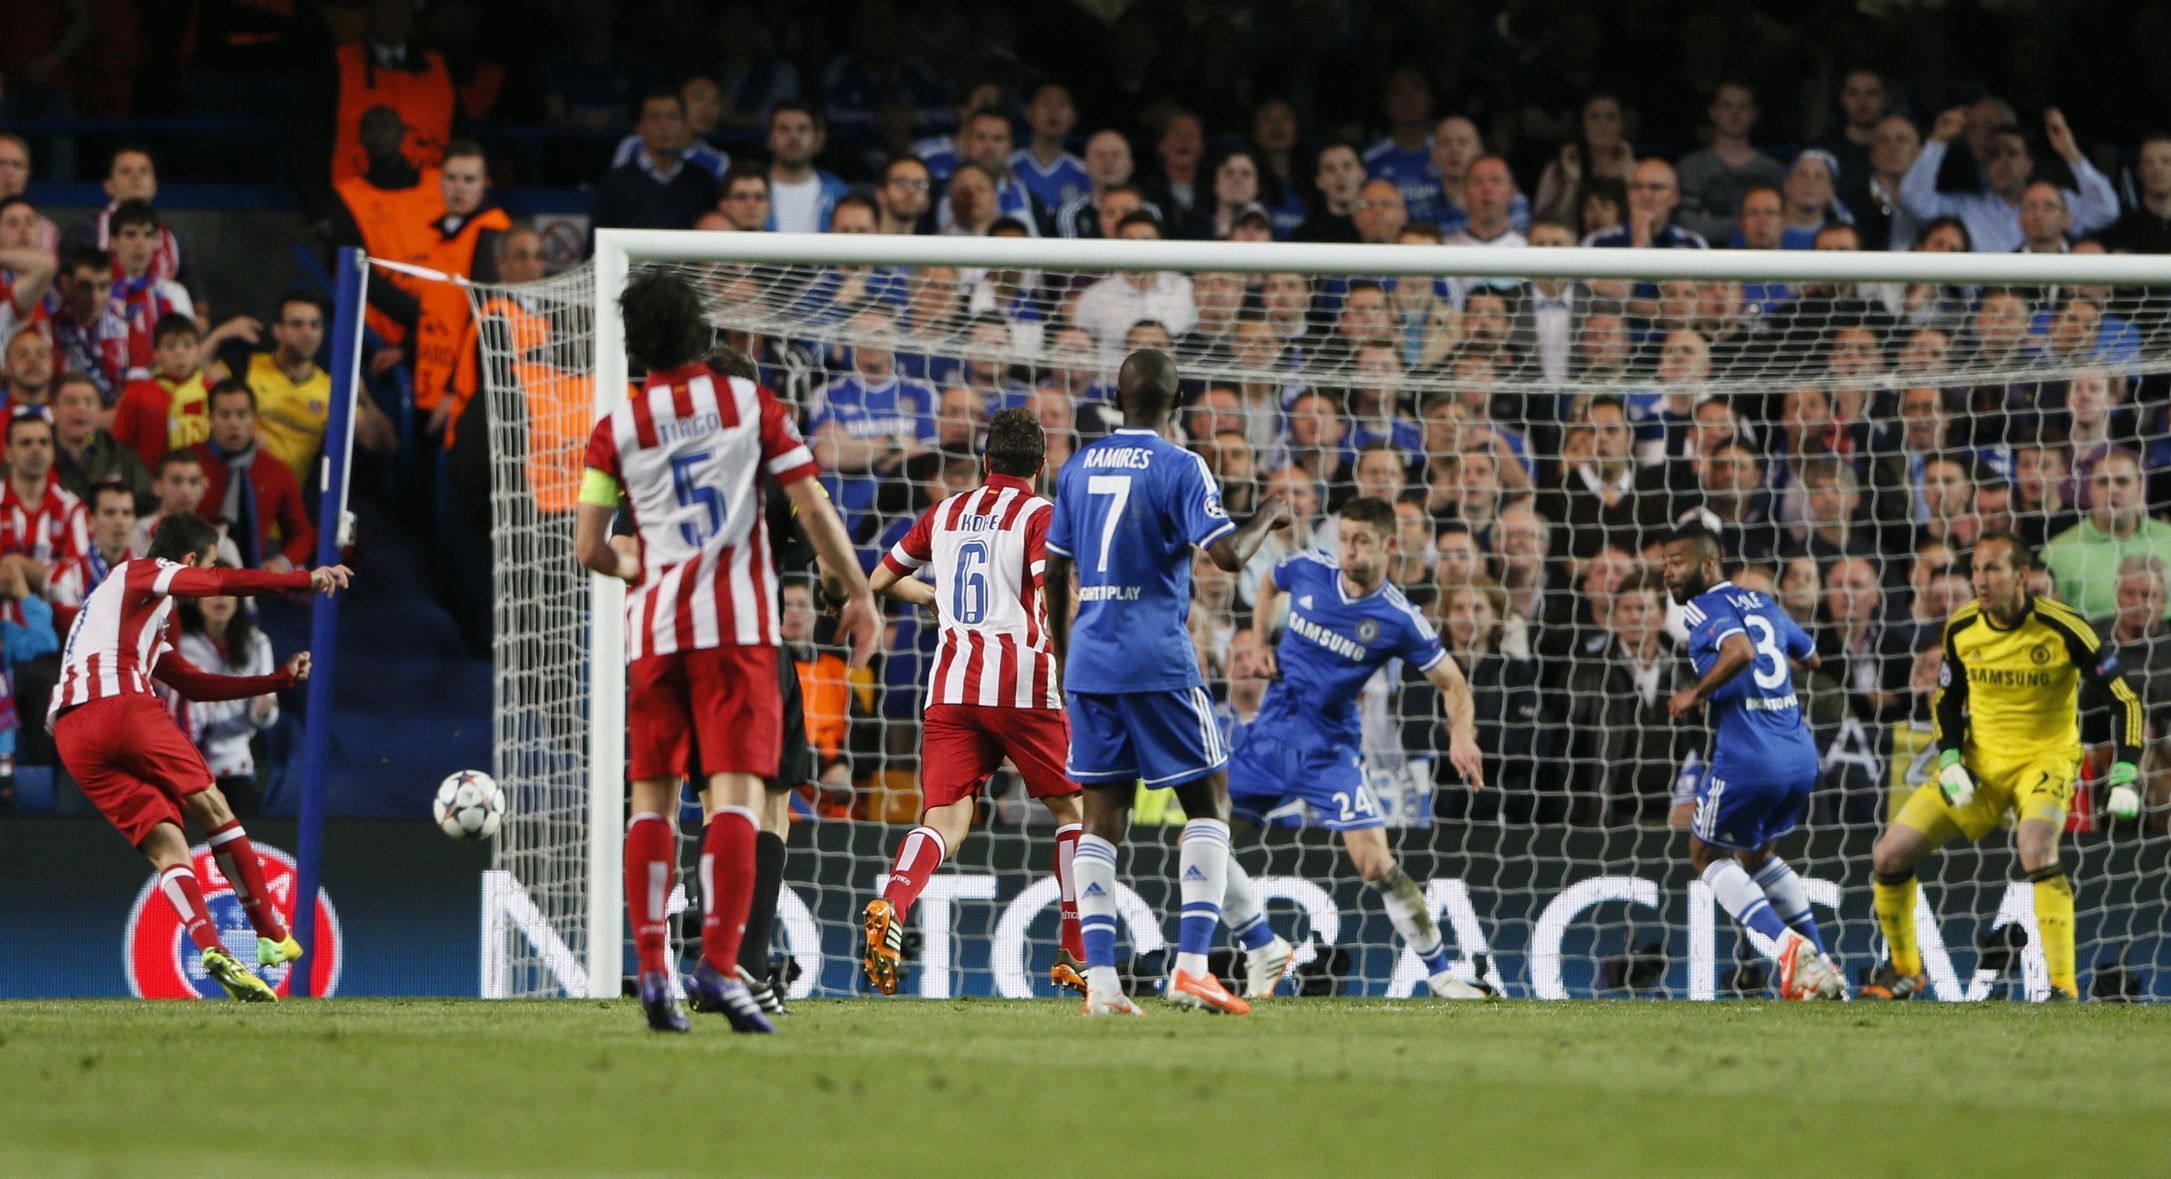 Atletico Madrid's Lopez scores a goal against Chelsea in Champion's League semi-final second leg soccer match in London